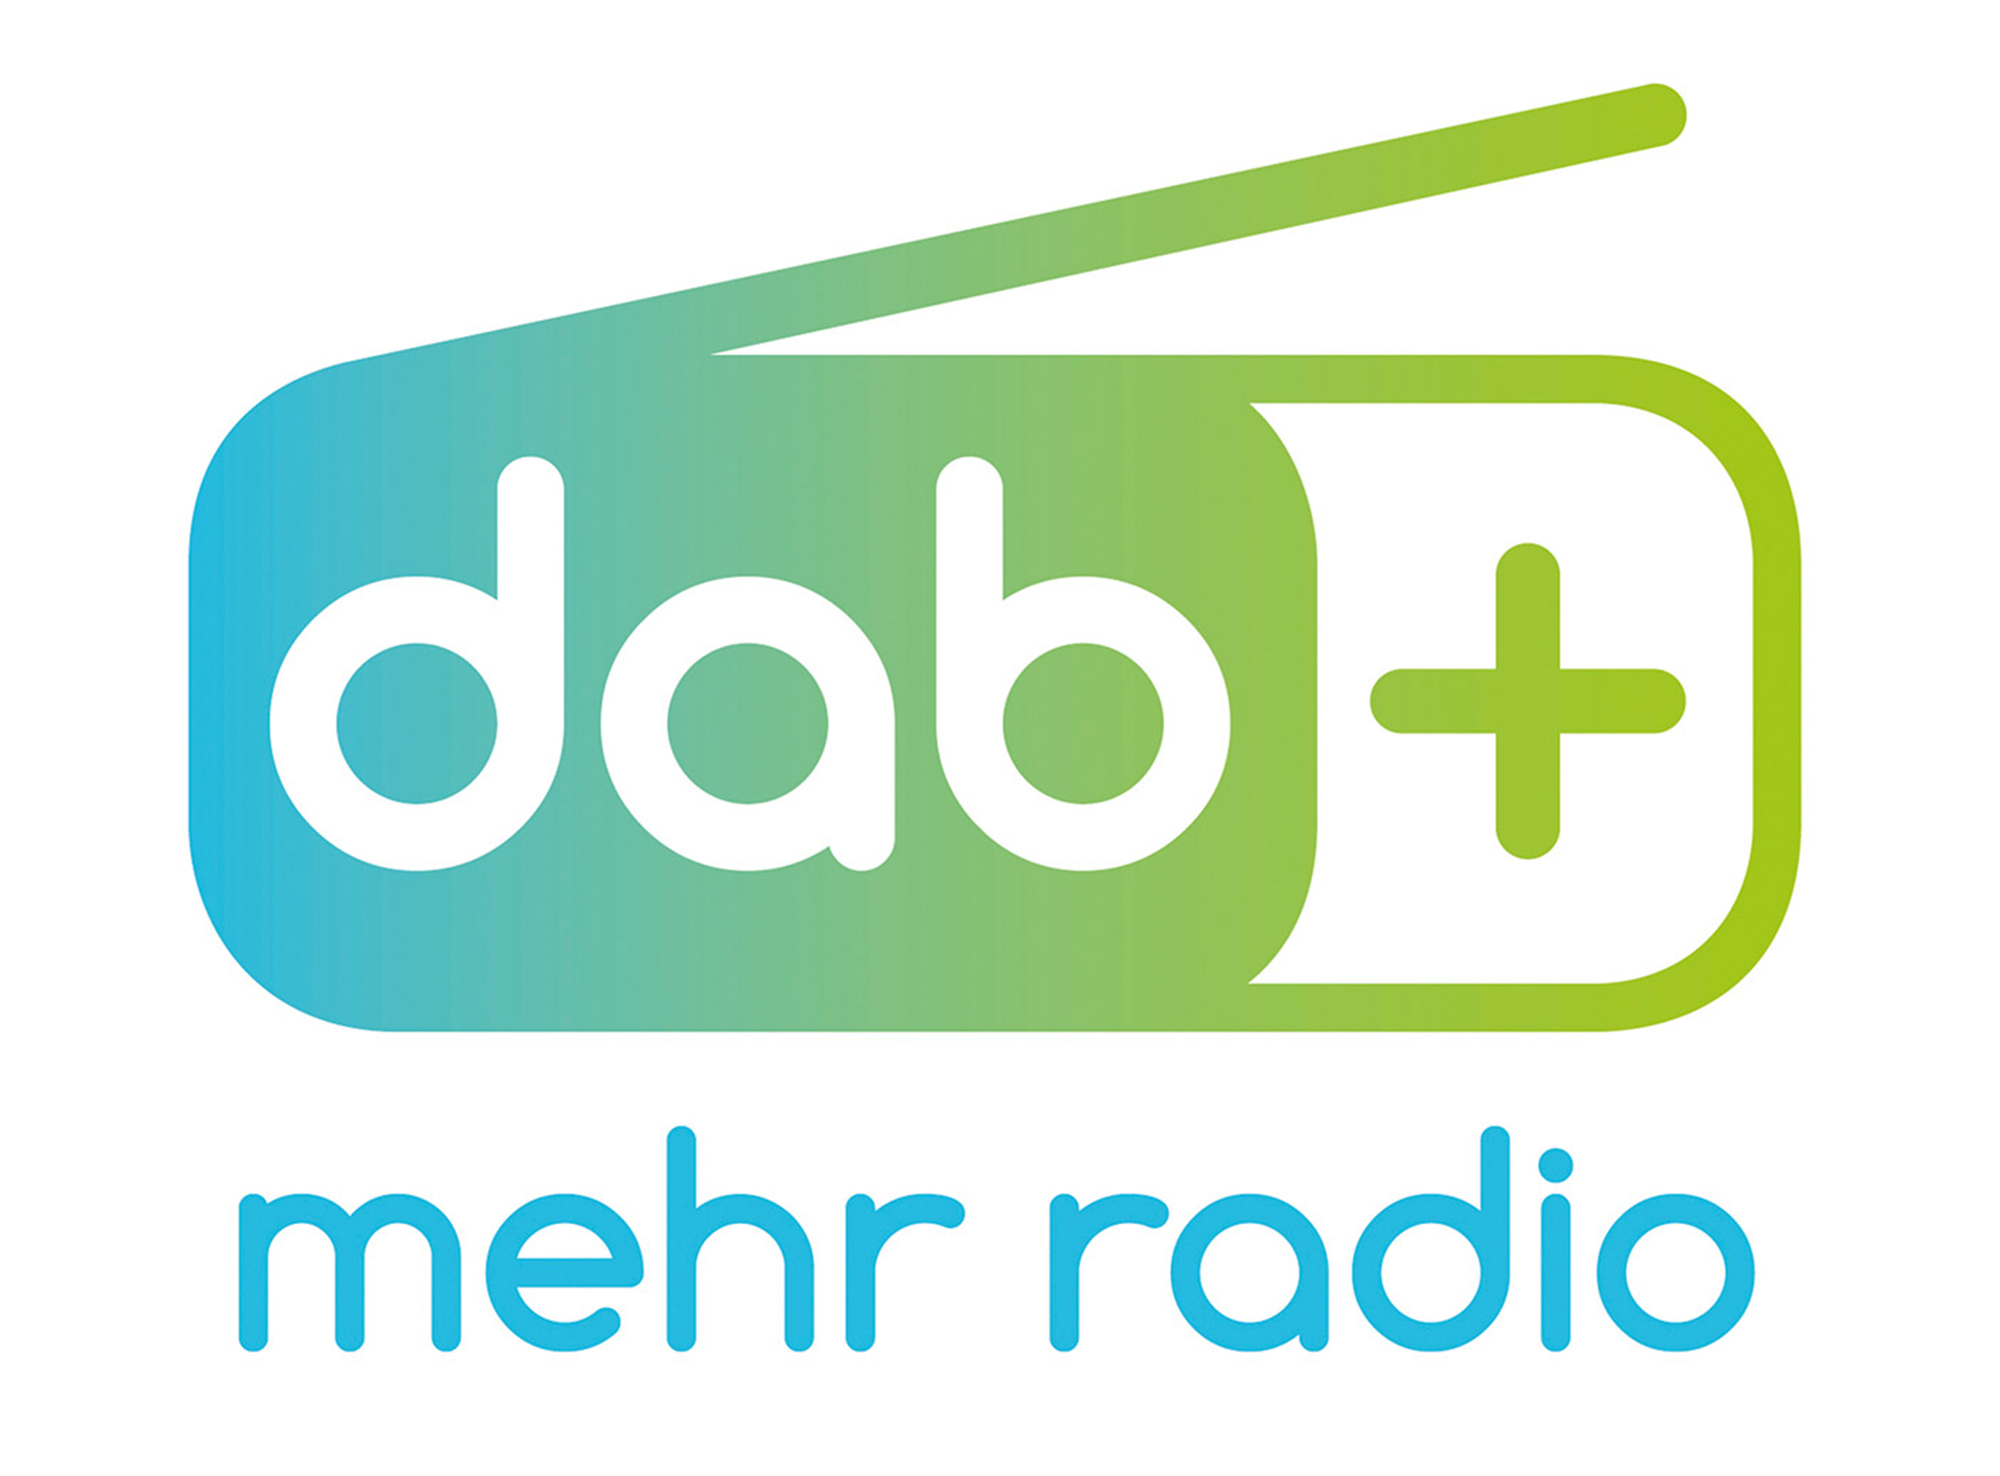 KARCHER RA 2035D Küchenradio, DAB+, (FM), Weiß Bluetooth, DAB+, UKW